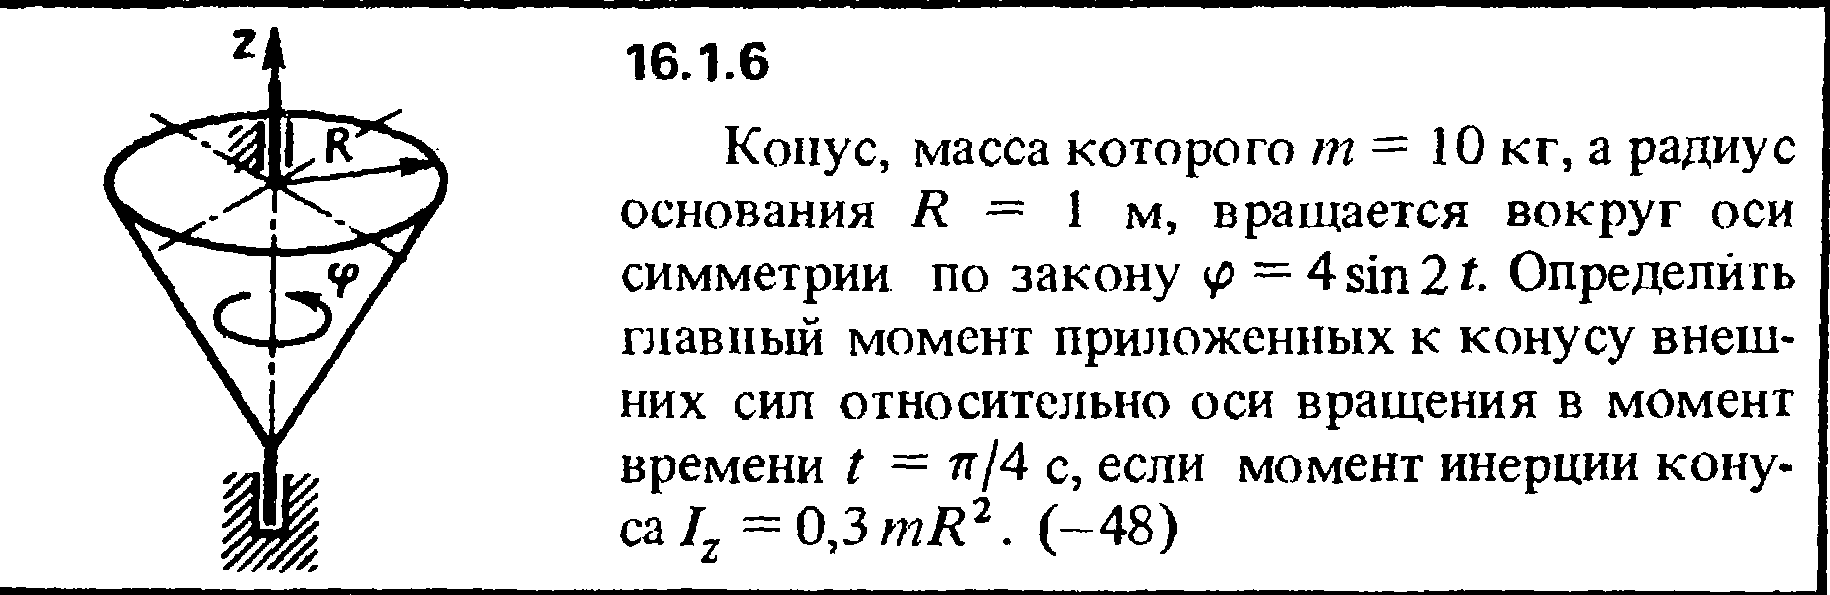 Решение задачи 16.1.6 из сборника Кепе О.Е. 1989 года